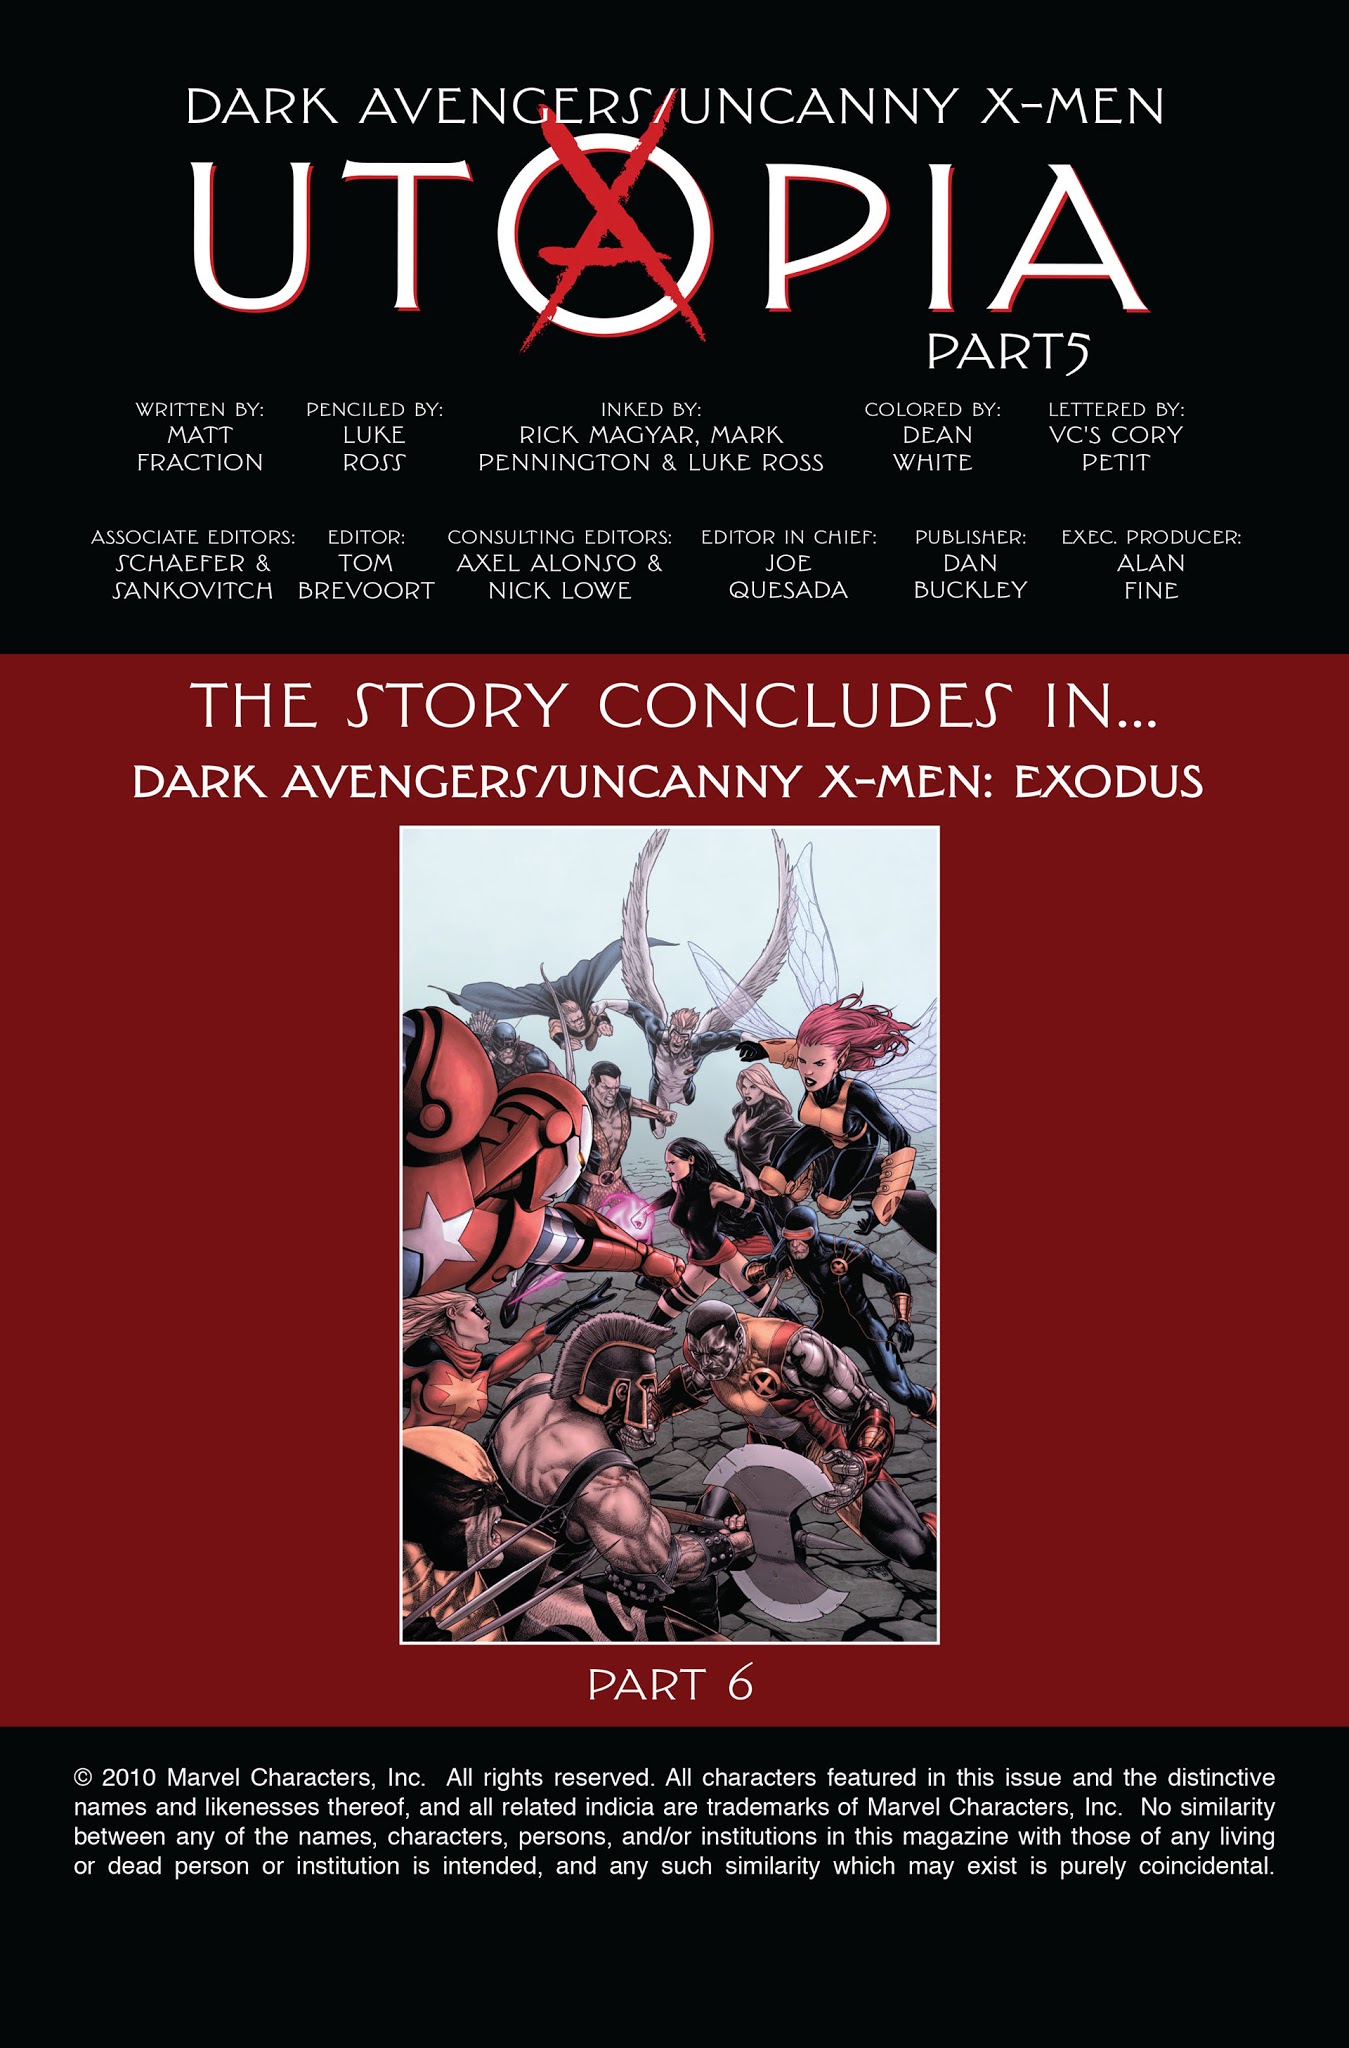 Read online Dark Avengers/Uncanny X-Men: Utopia comic -  Issue # TPB - 134